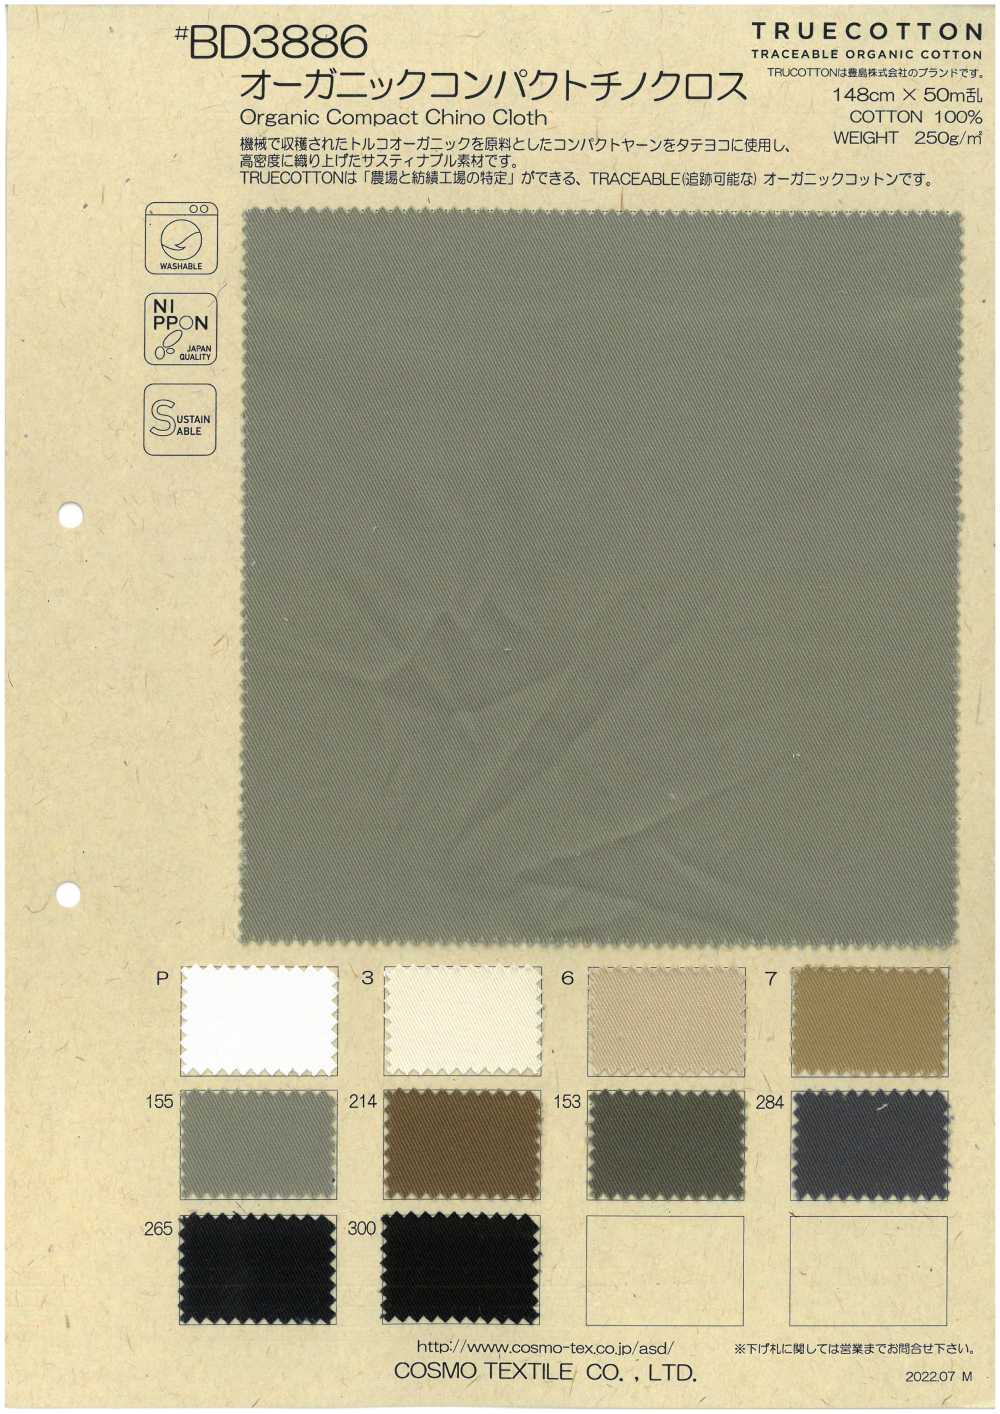 BD3886 Chino En Fil Compact Bio[Fabrication De Textile] COSMO TEXTILE